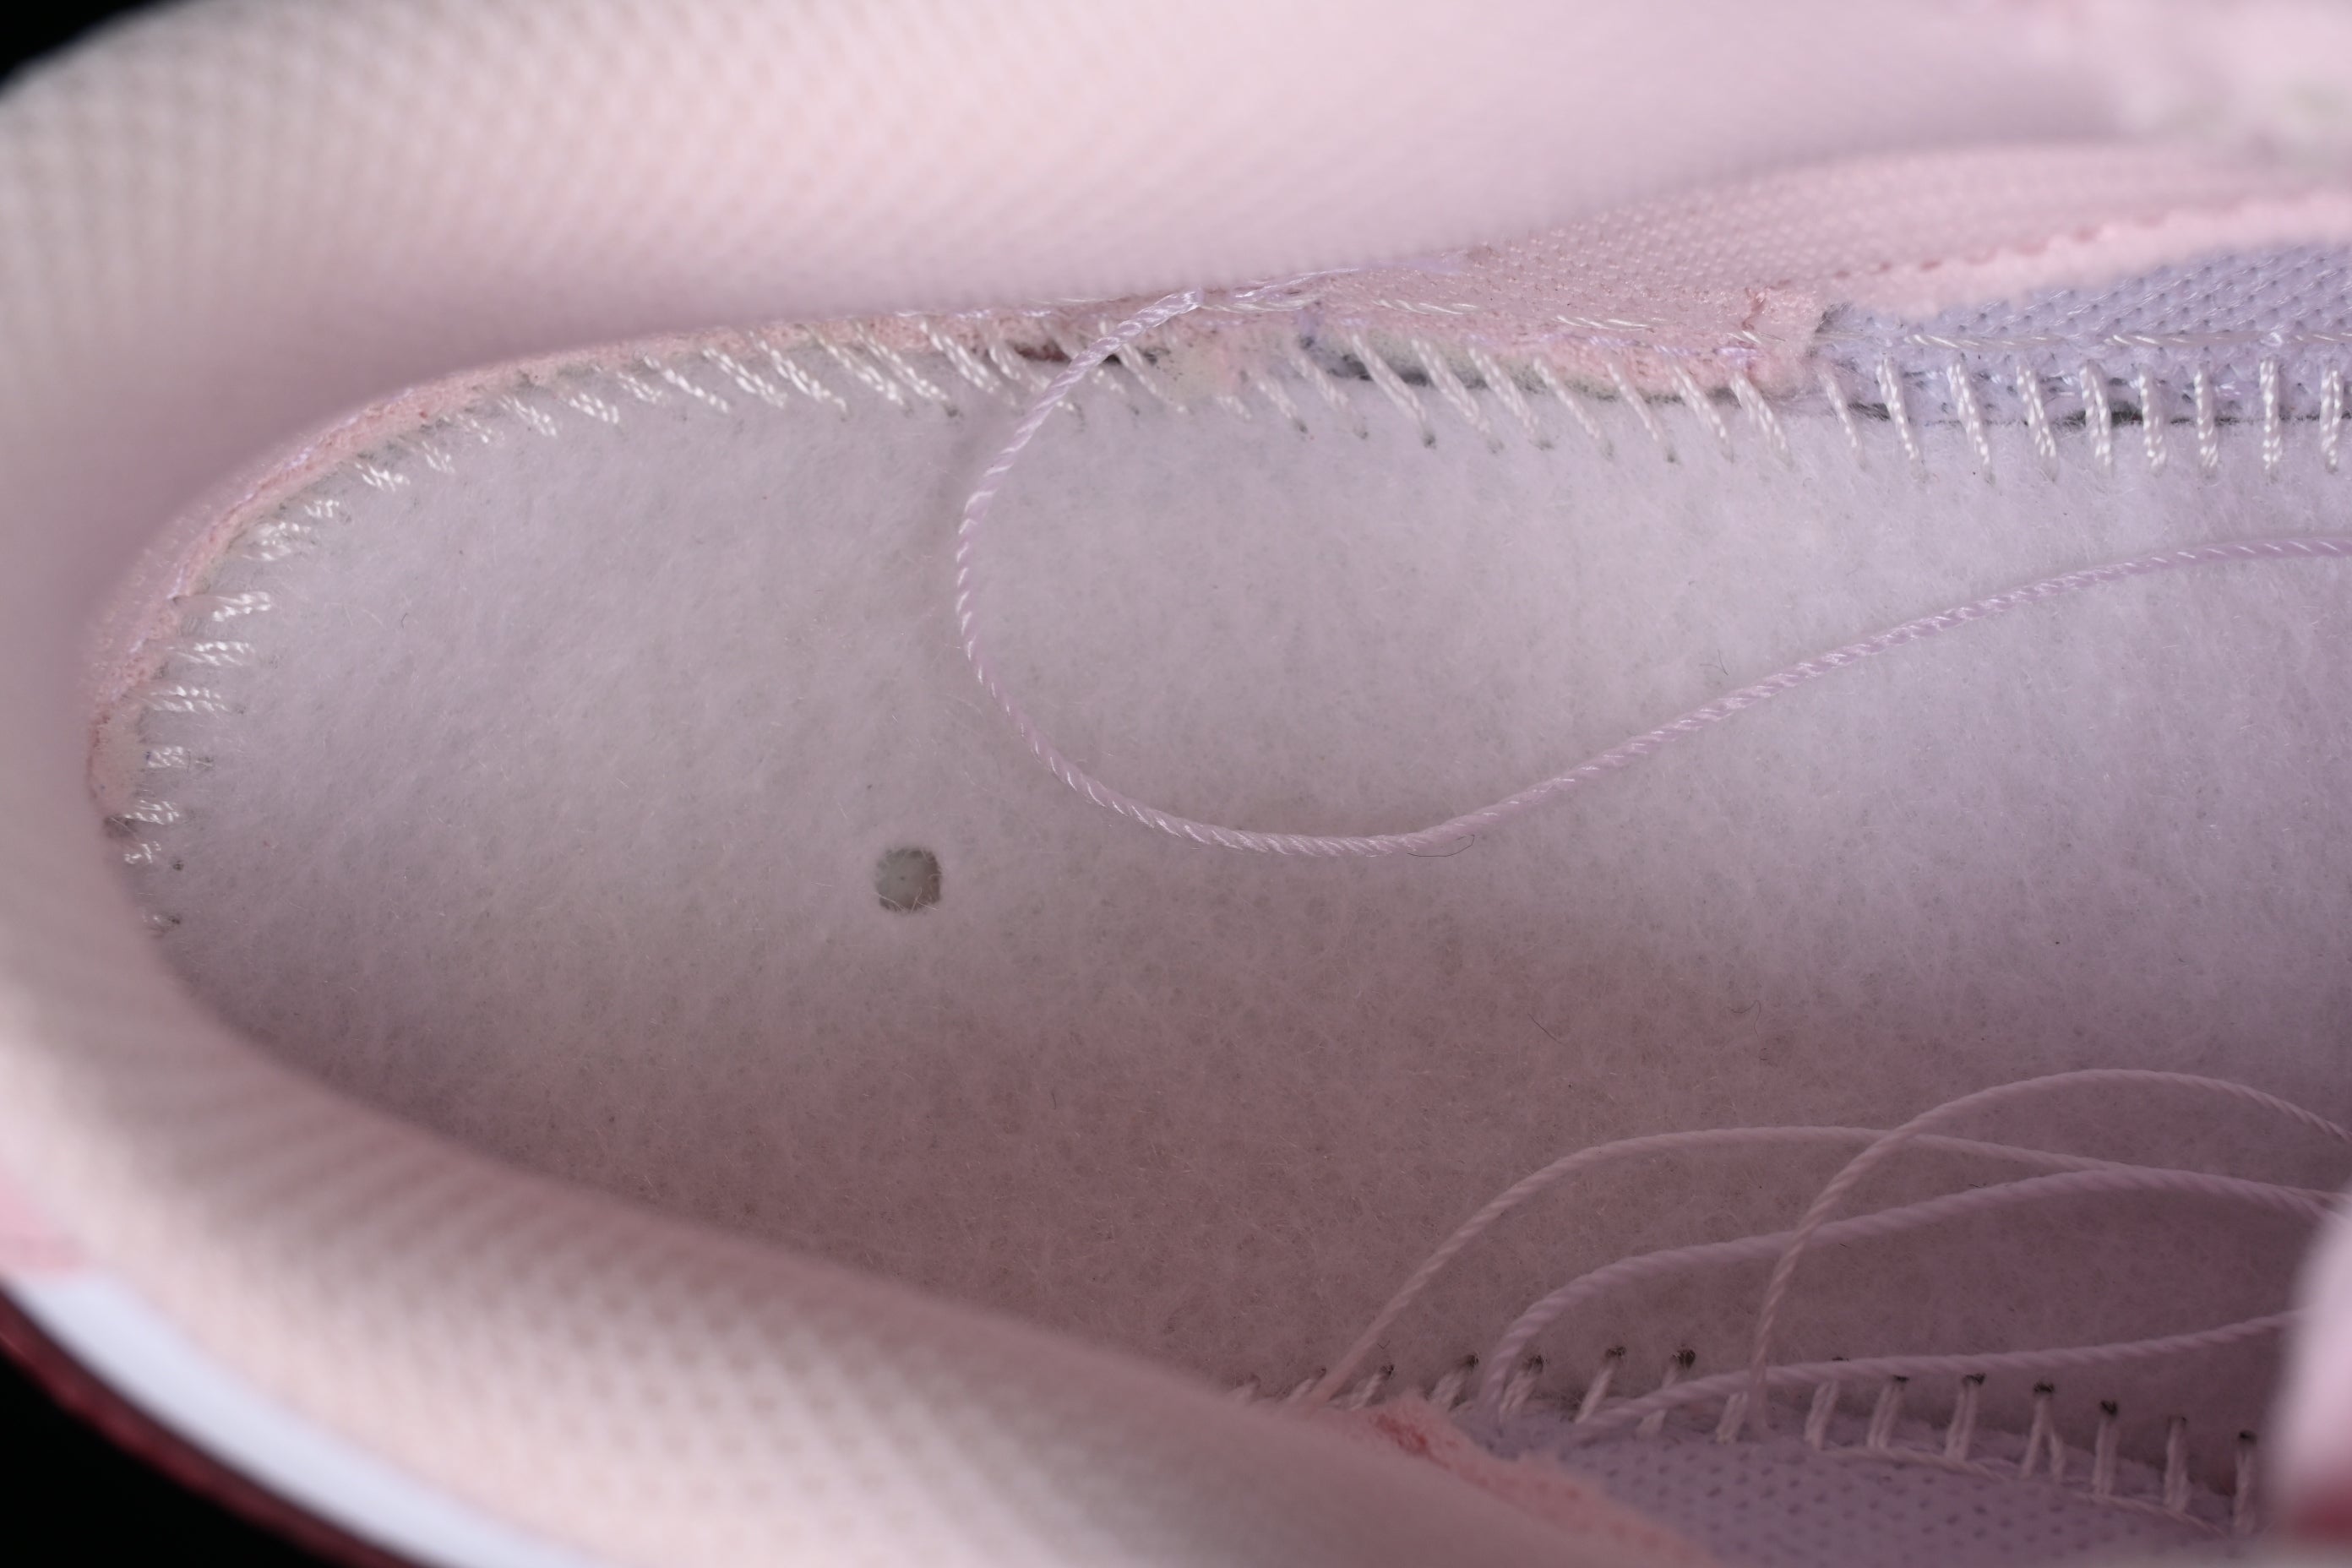 NikeWMNS SB Dunk Low - Pink Foam